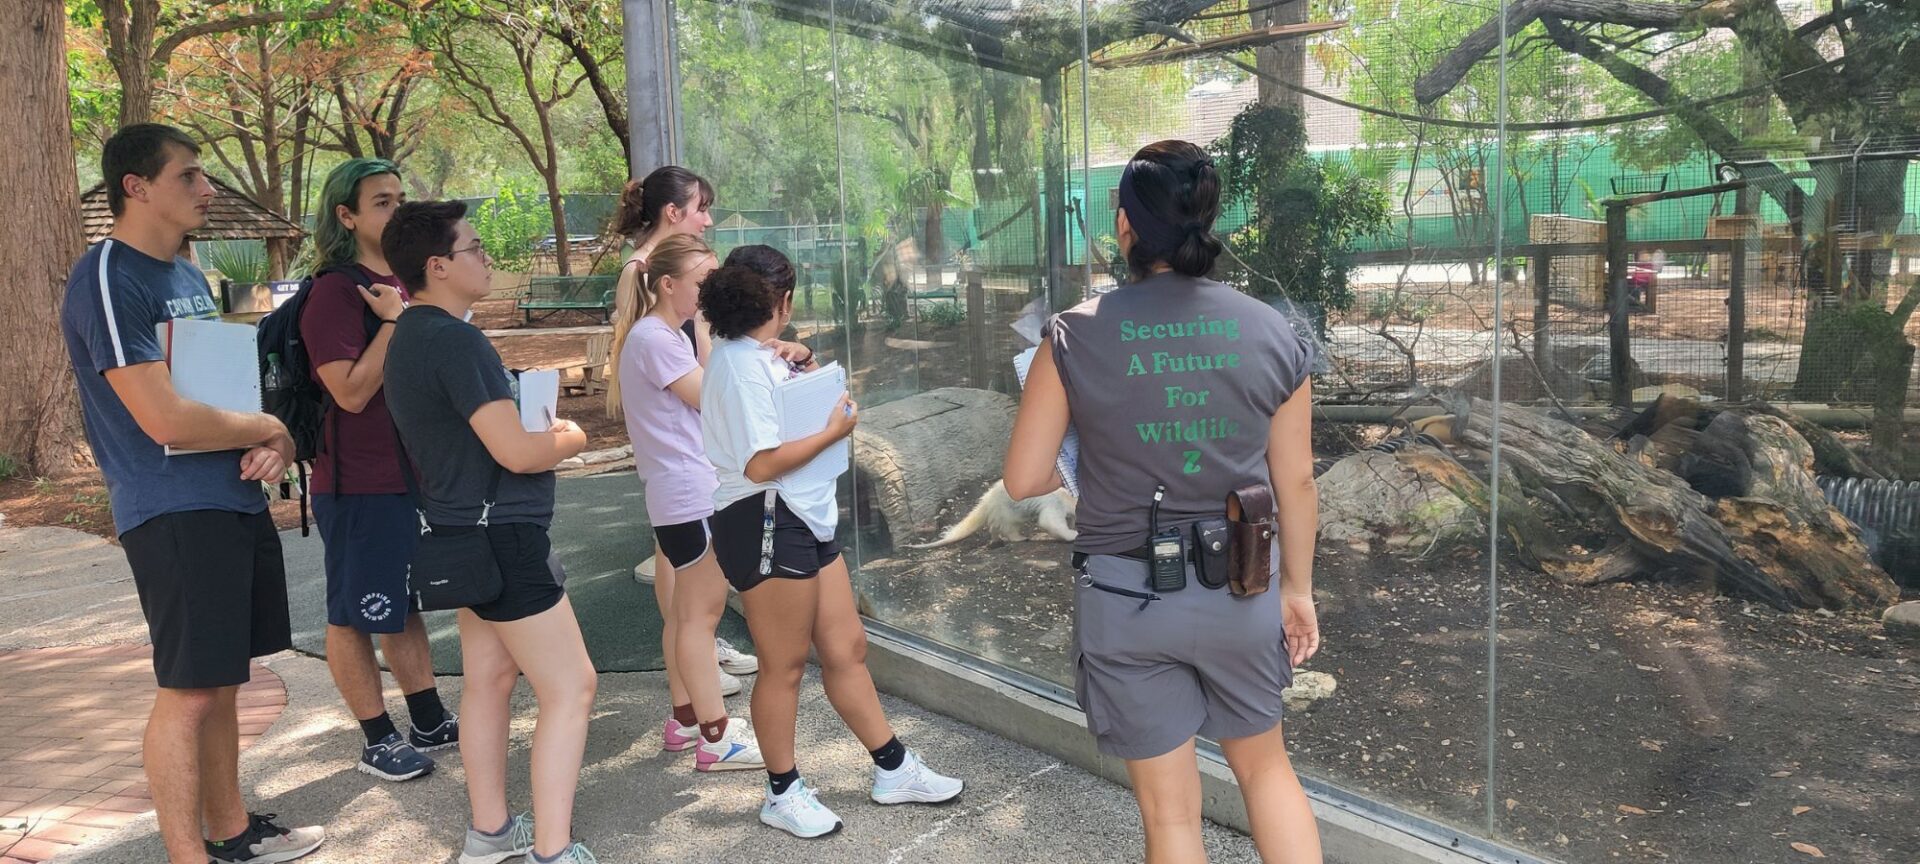 Zoo Crew Team Member